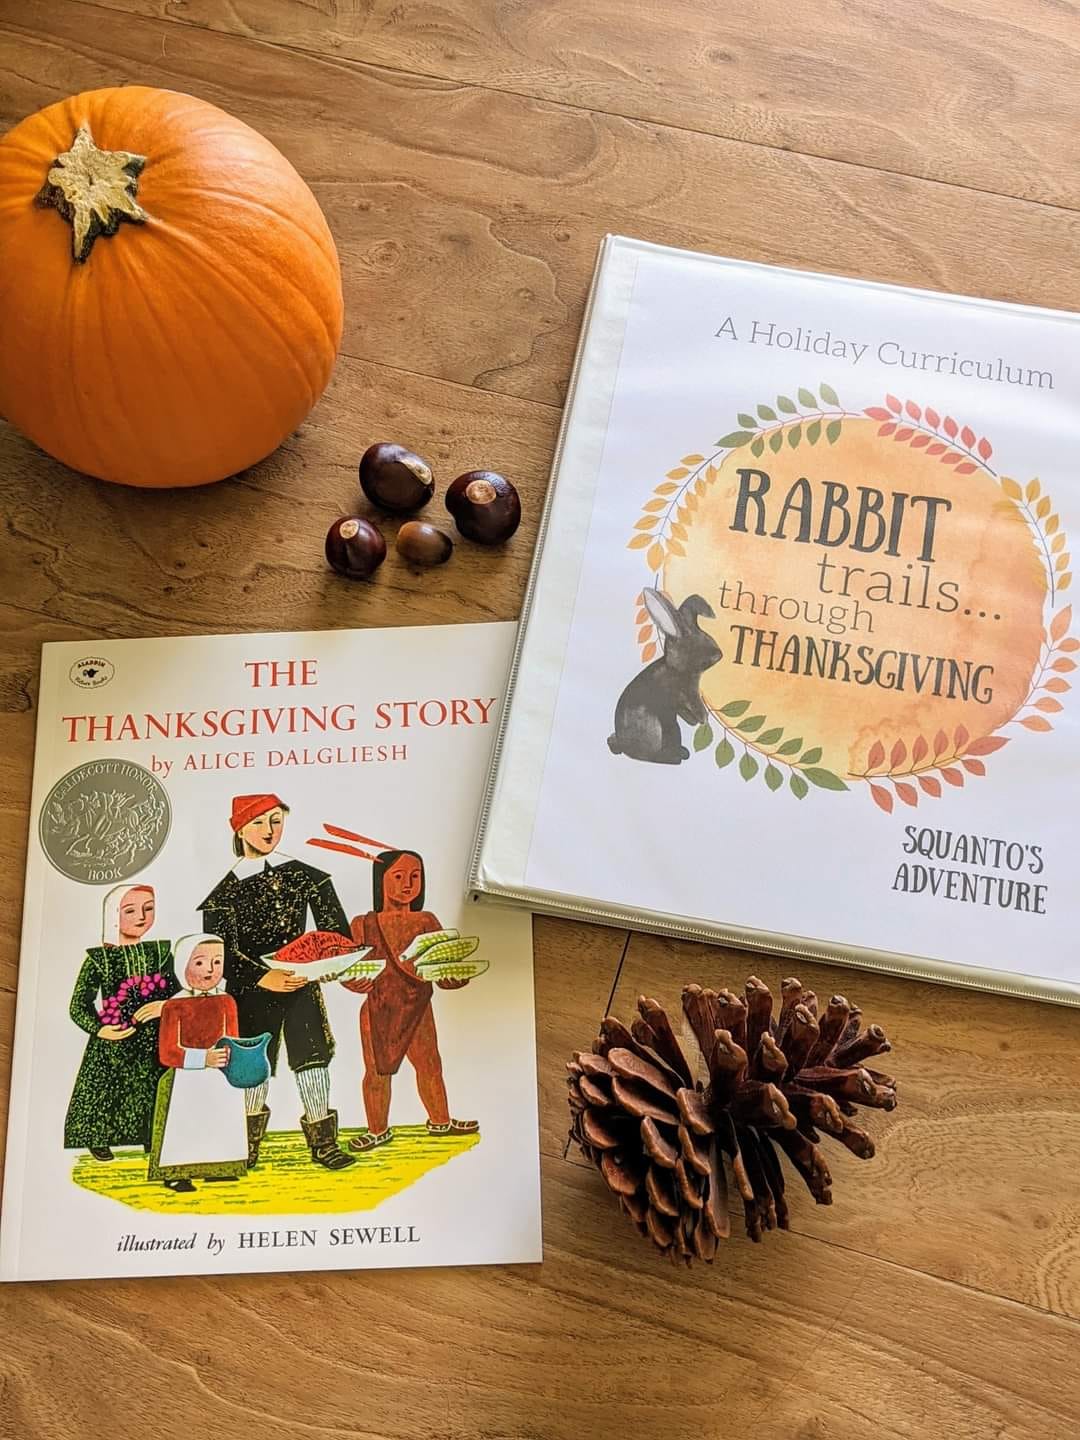 Rabbit Trails through Thanksgiving - Squanto's Adventure